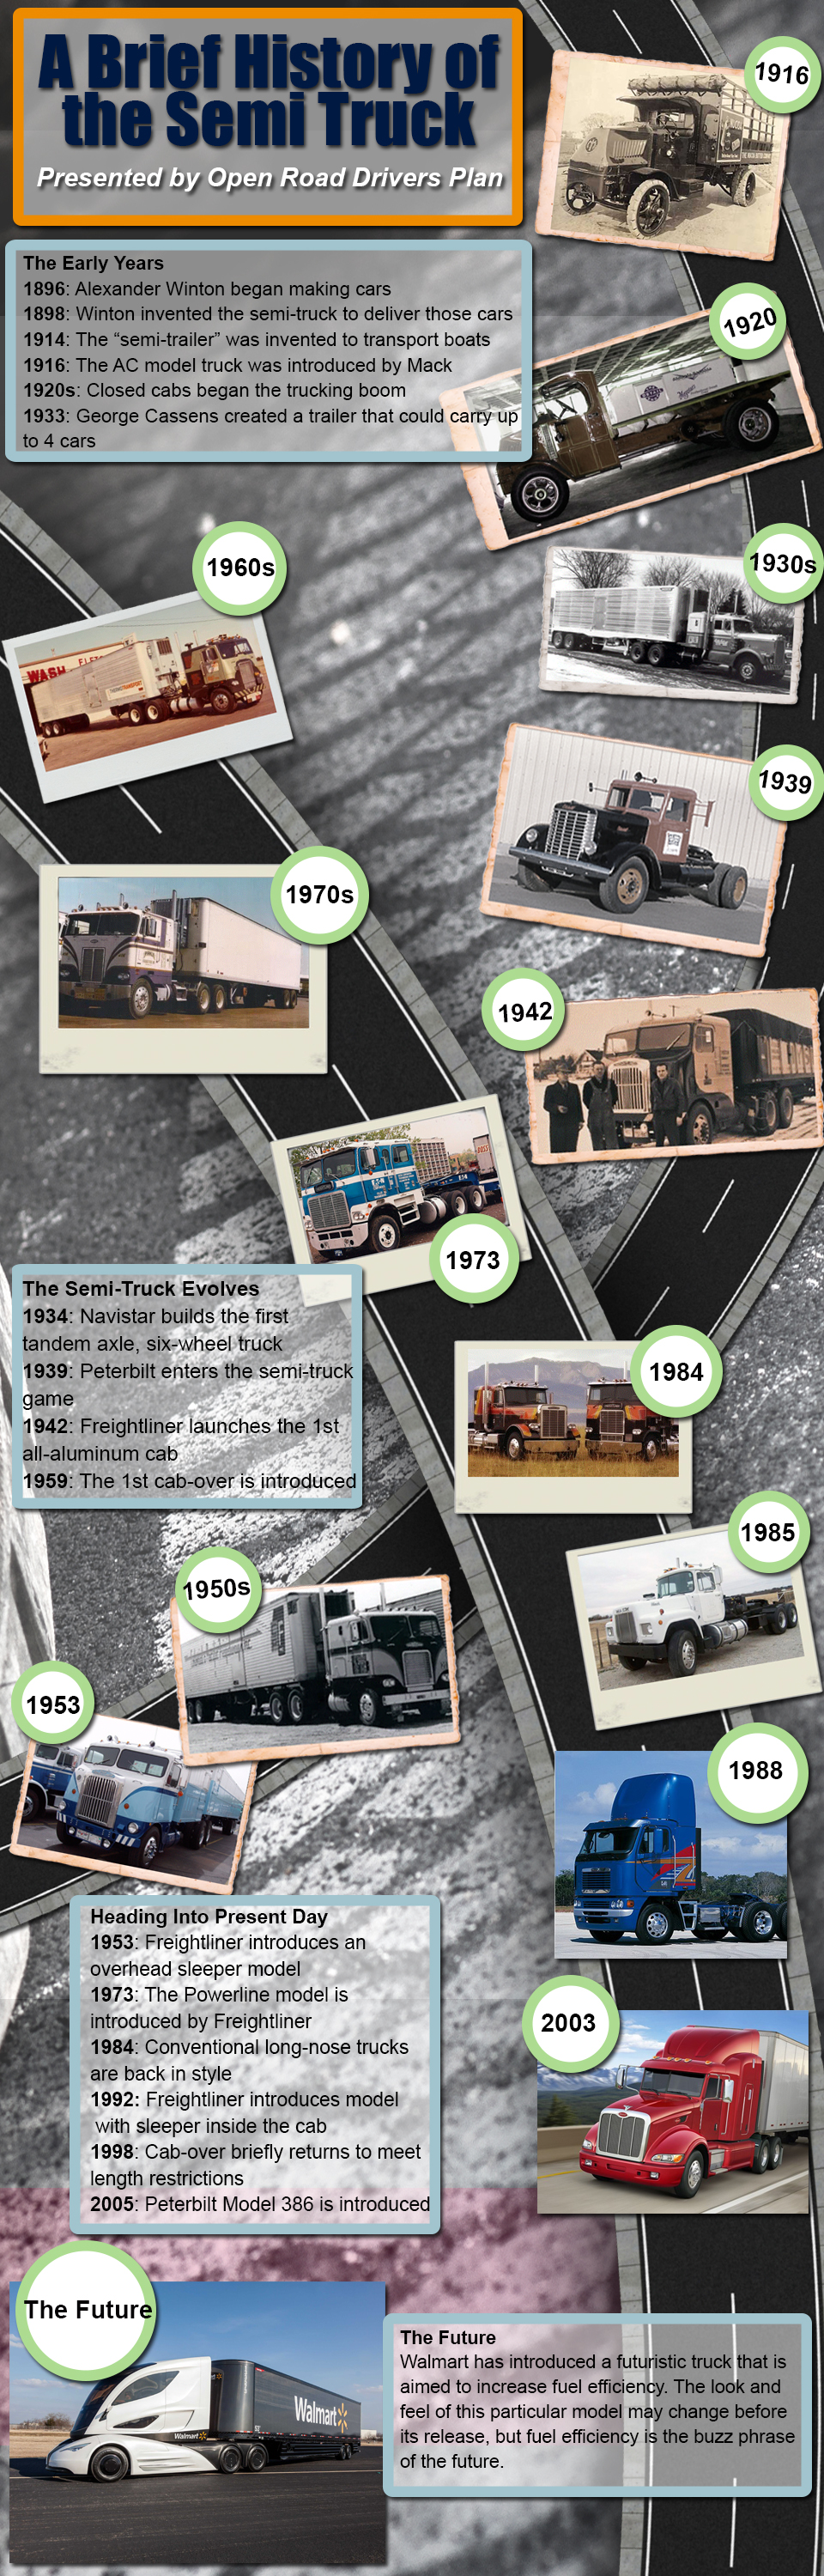 History of the Semi Truck #TruckerTuesday